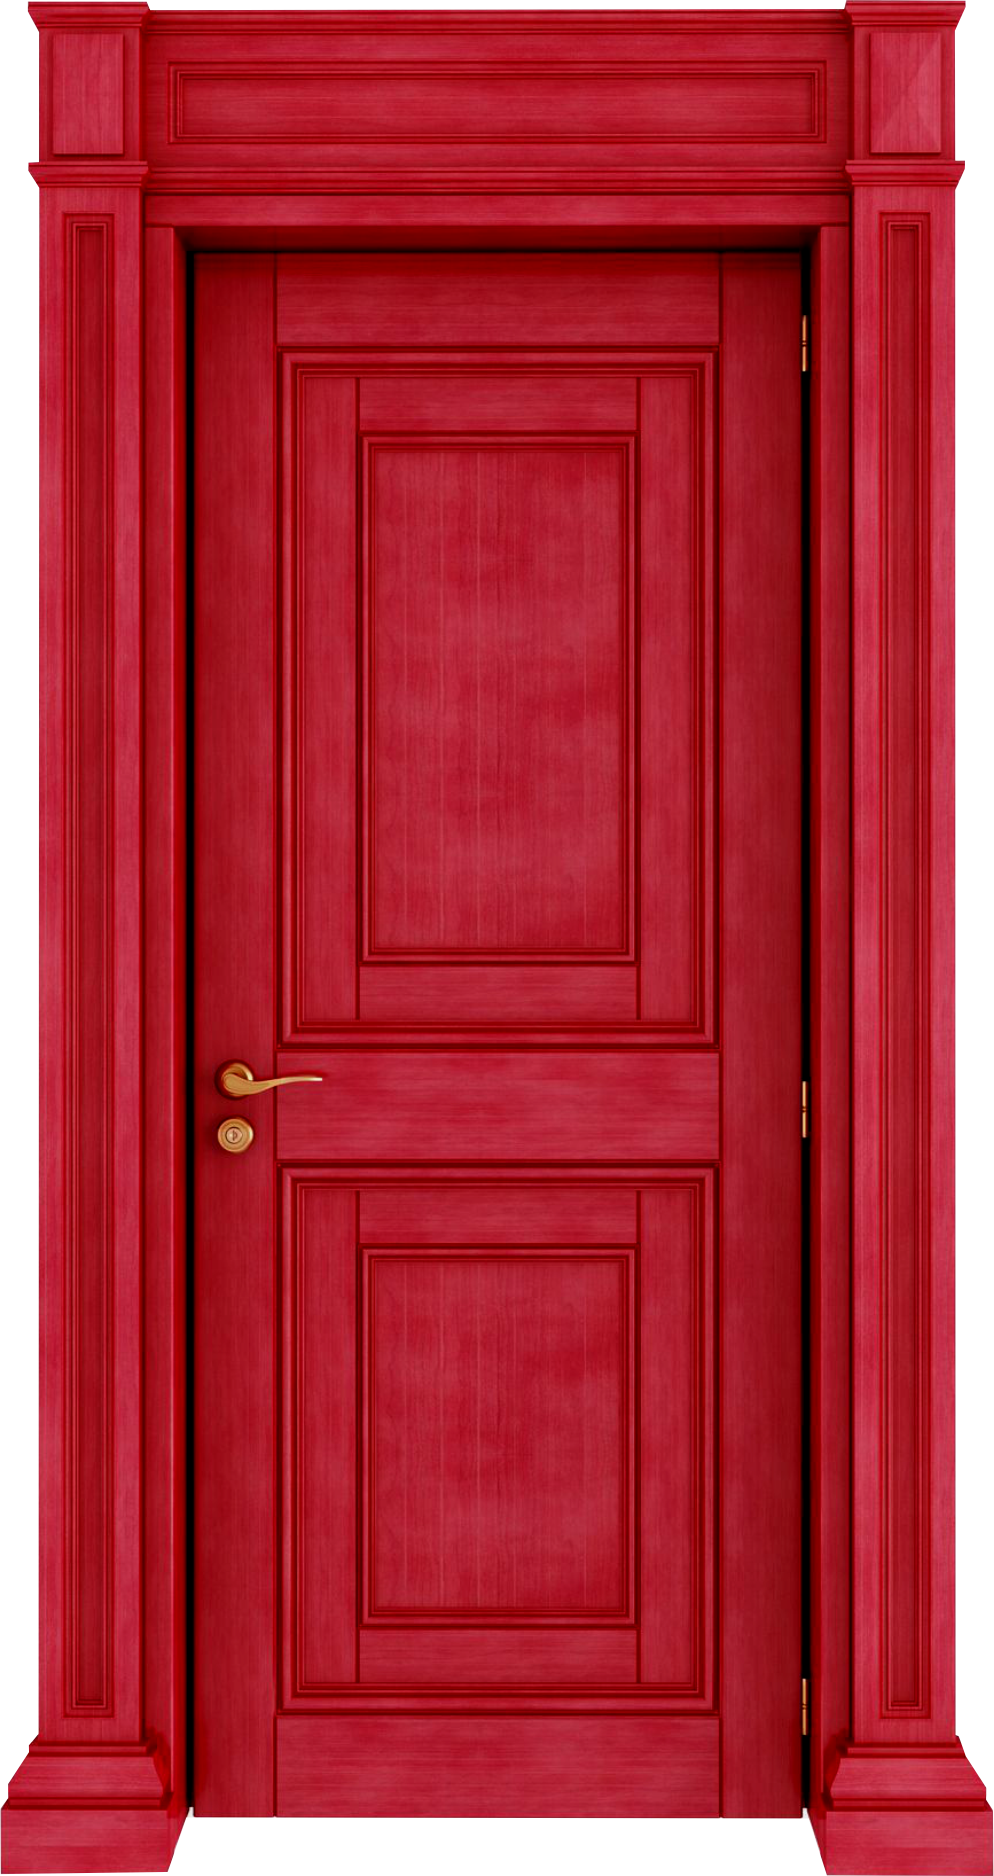 Qujam geofence advertising: red closed door